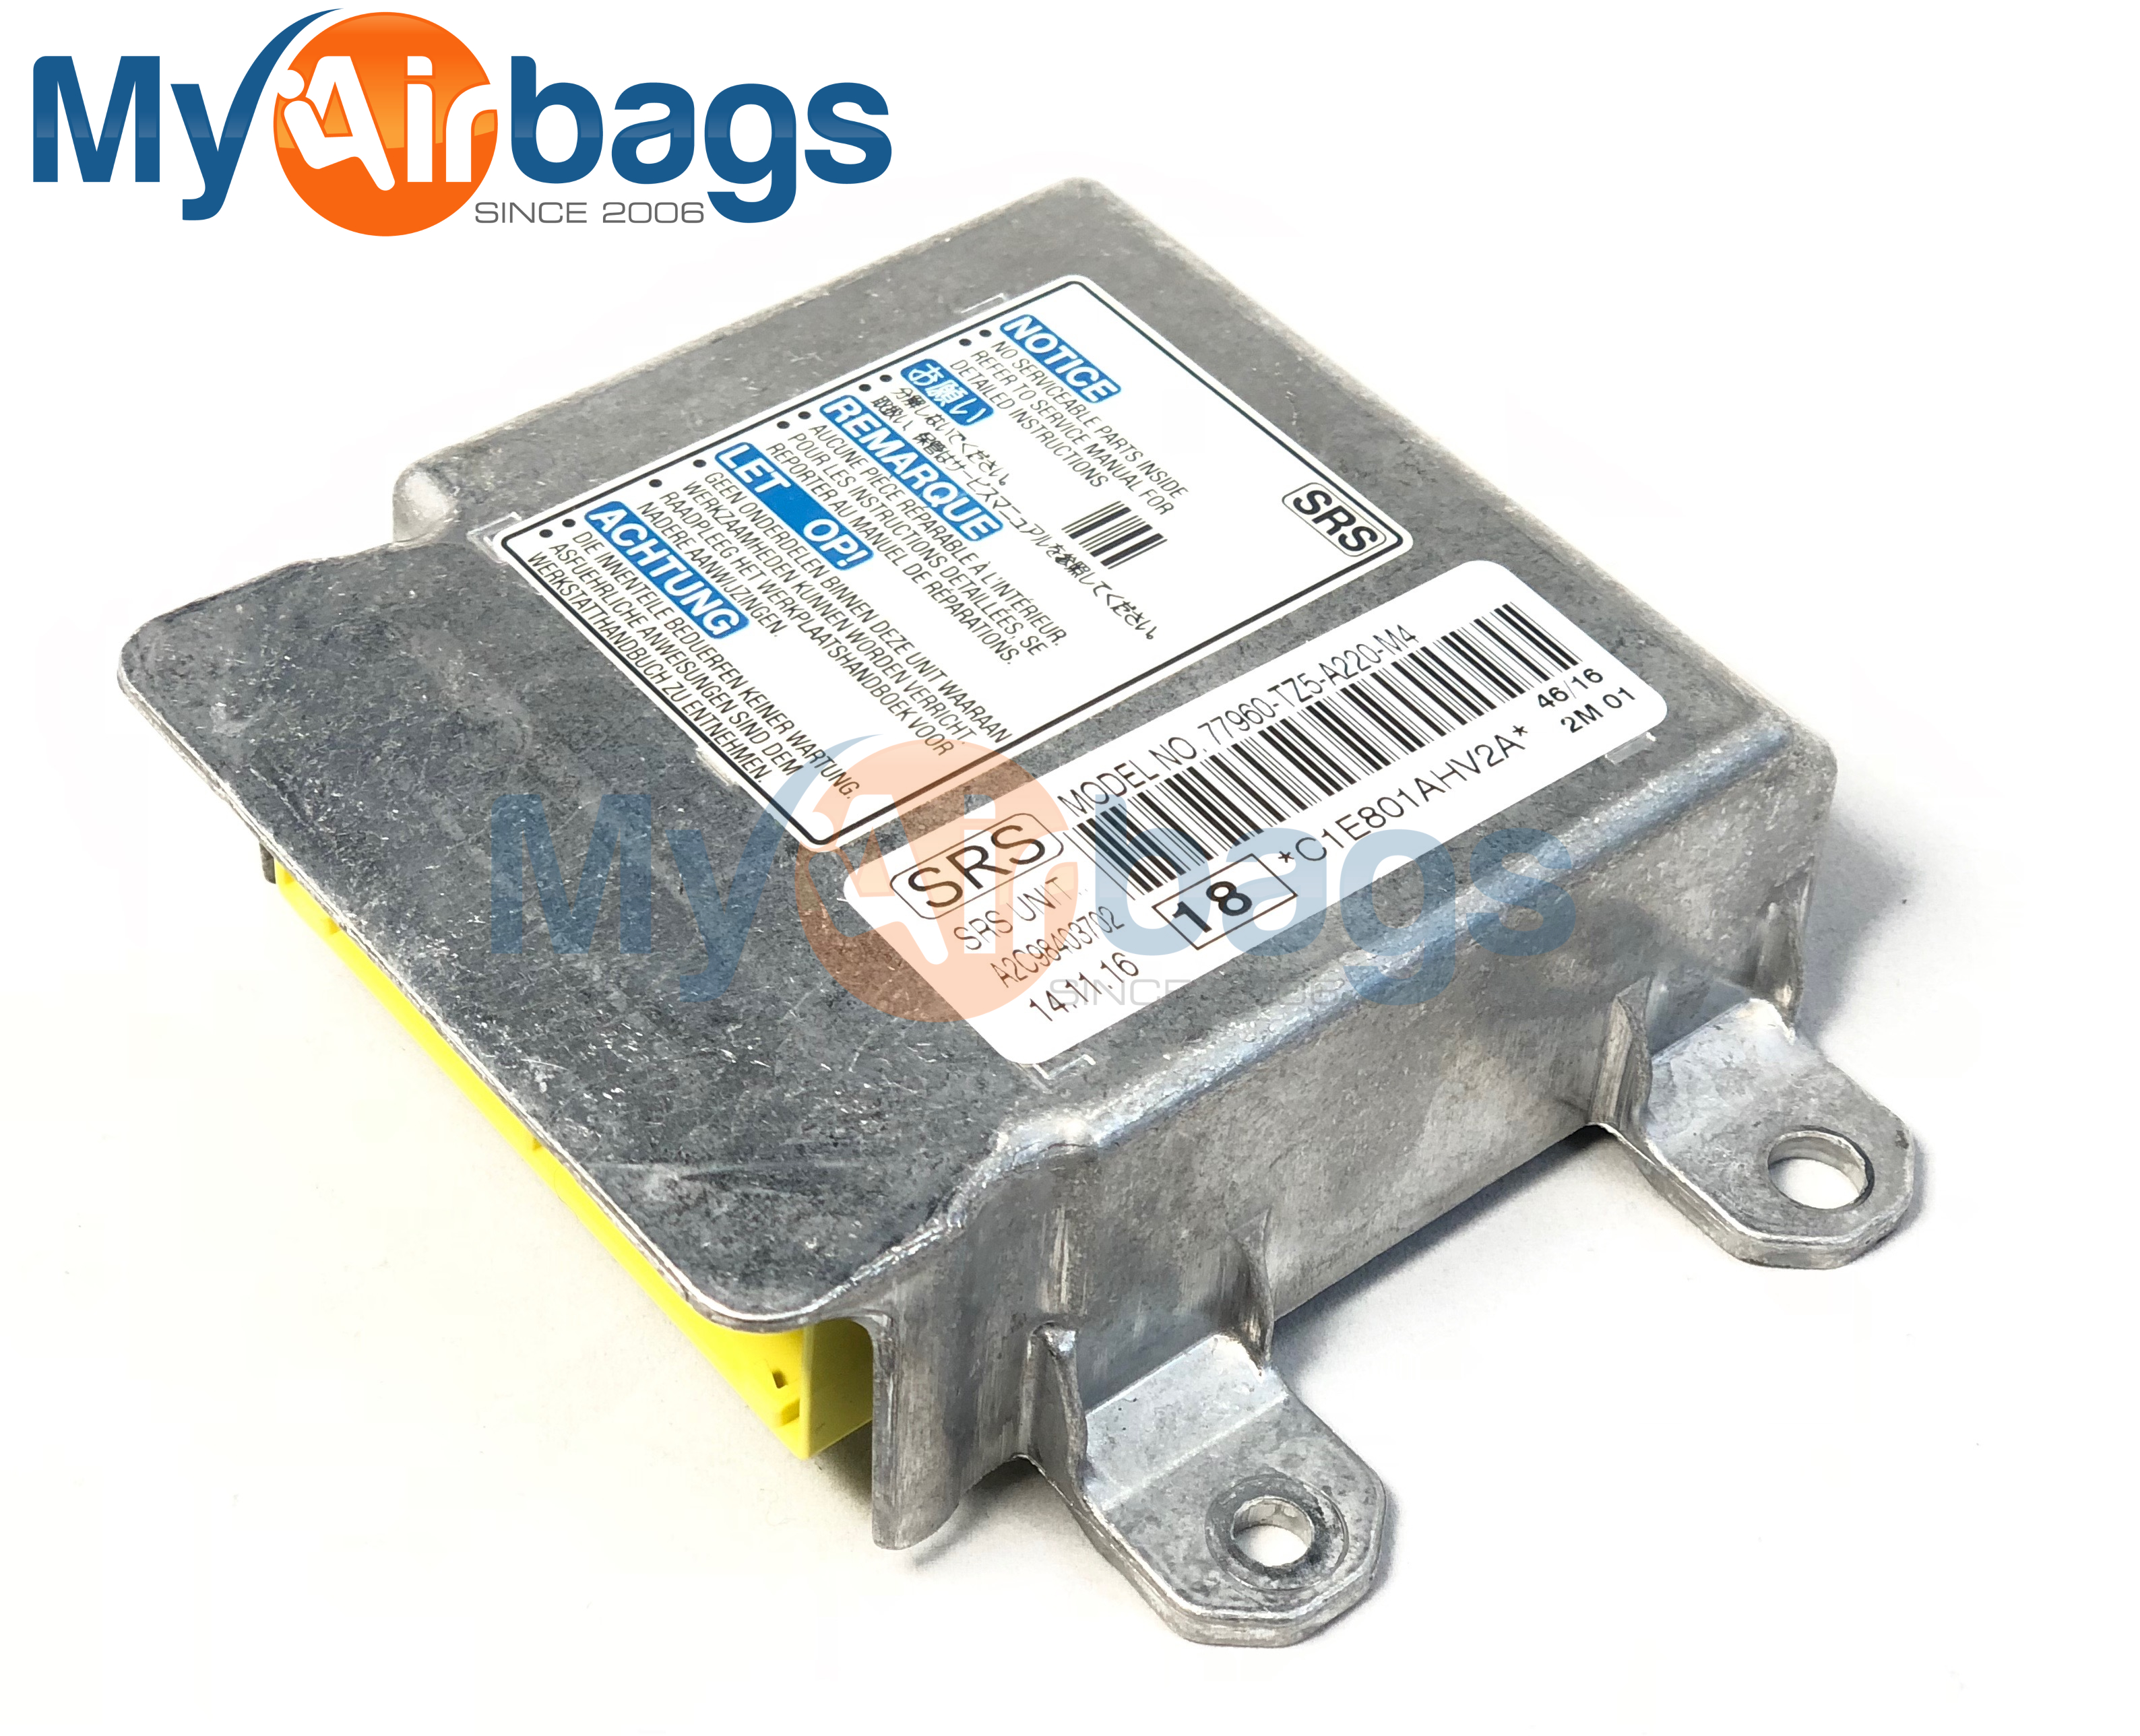 ACURA MDX SRS Airbag Computer Diagnostic Control Module PART #77960TZ5A220M4